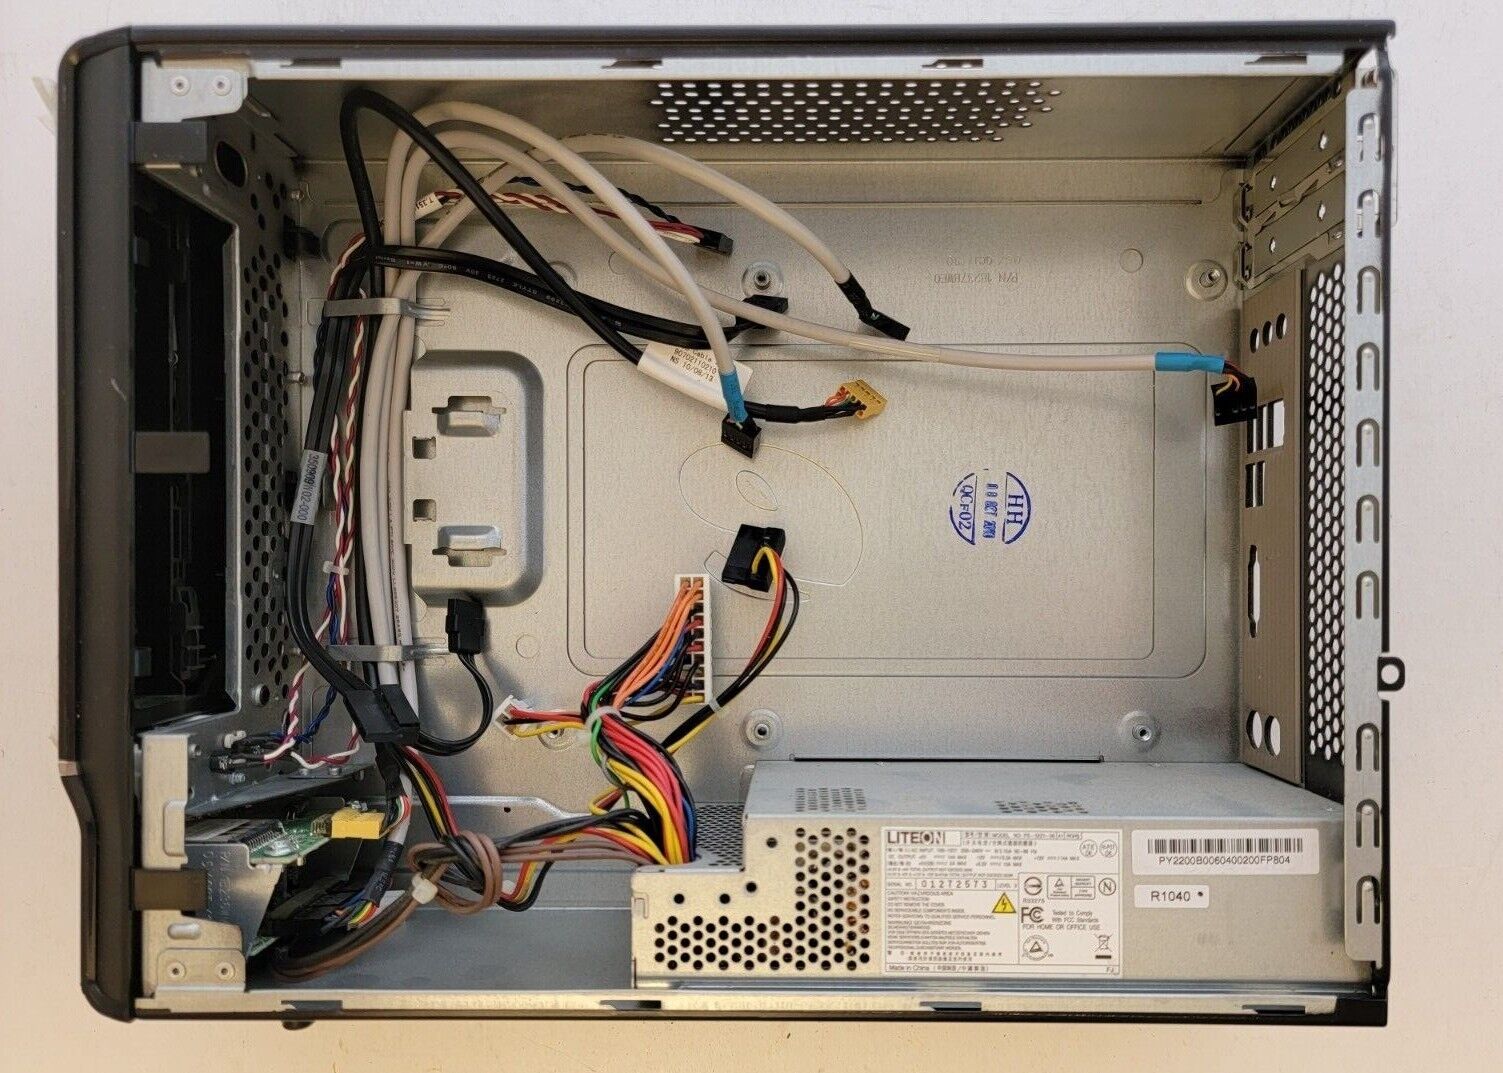 eMachines EL1352-01e Desktop PC & Power Supply (Barebone Case)